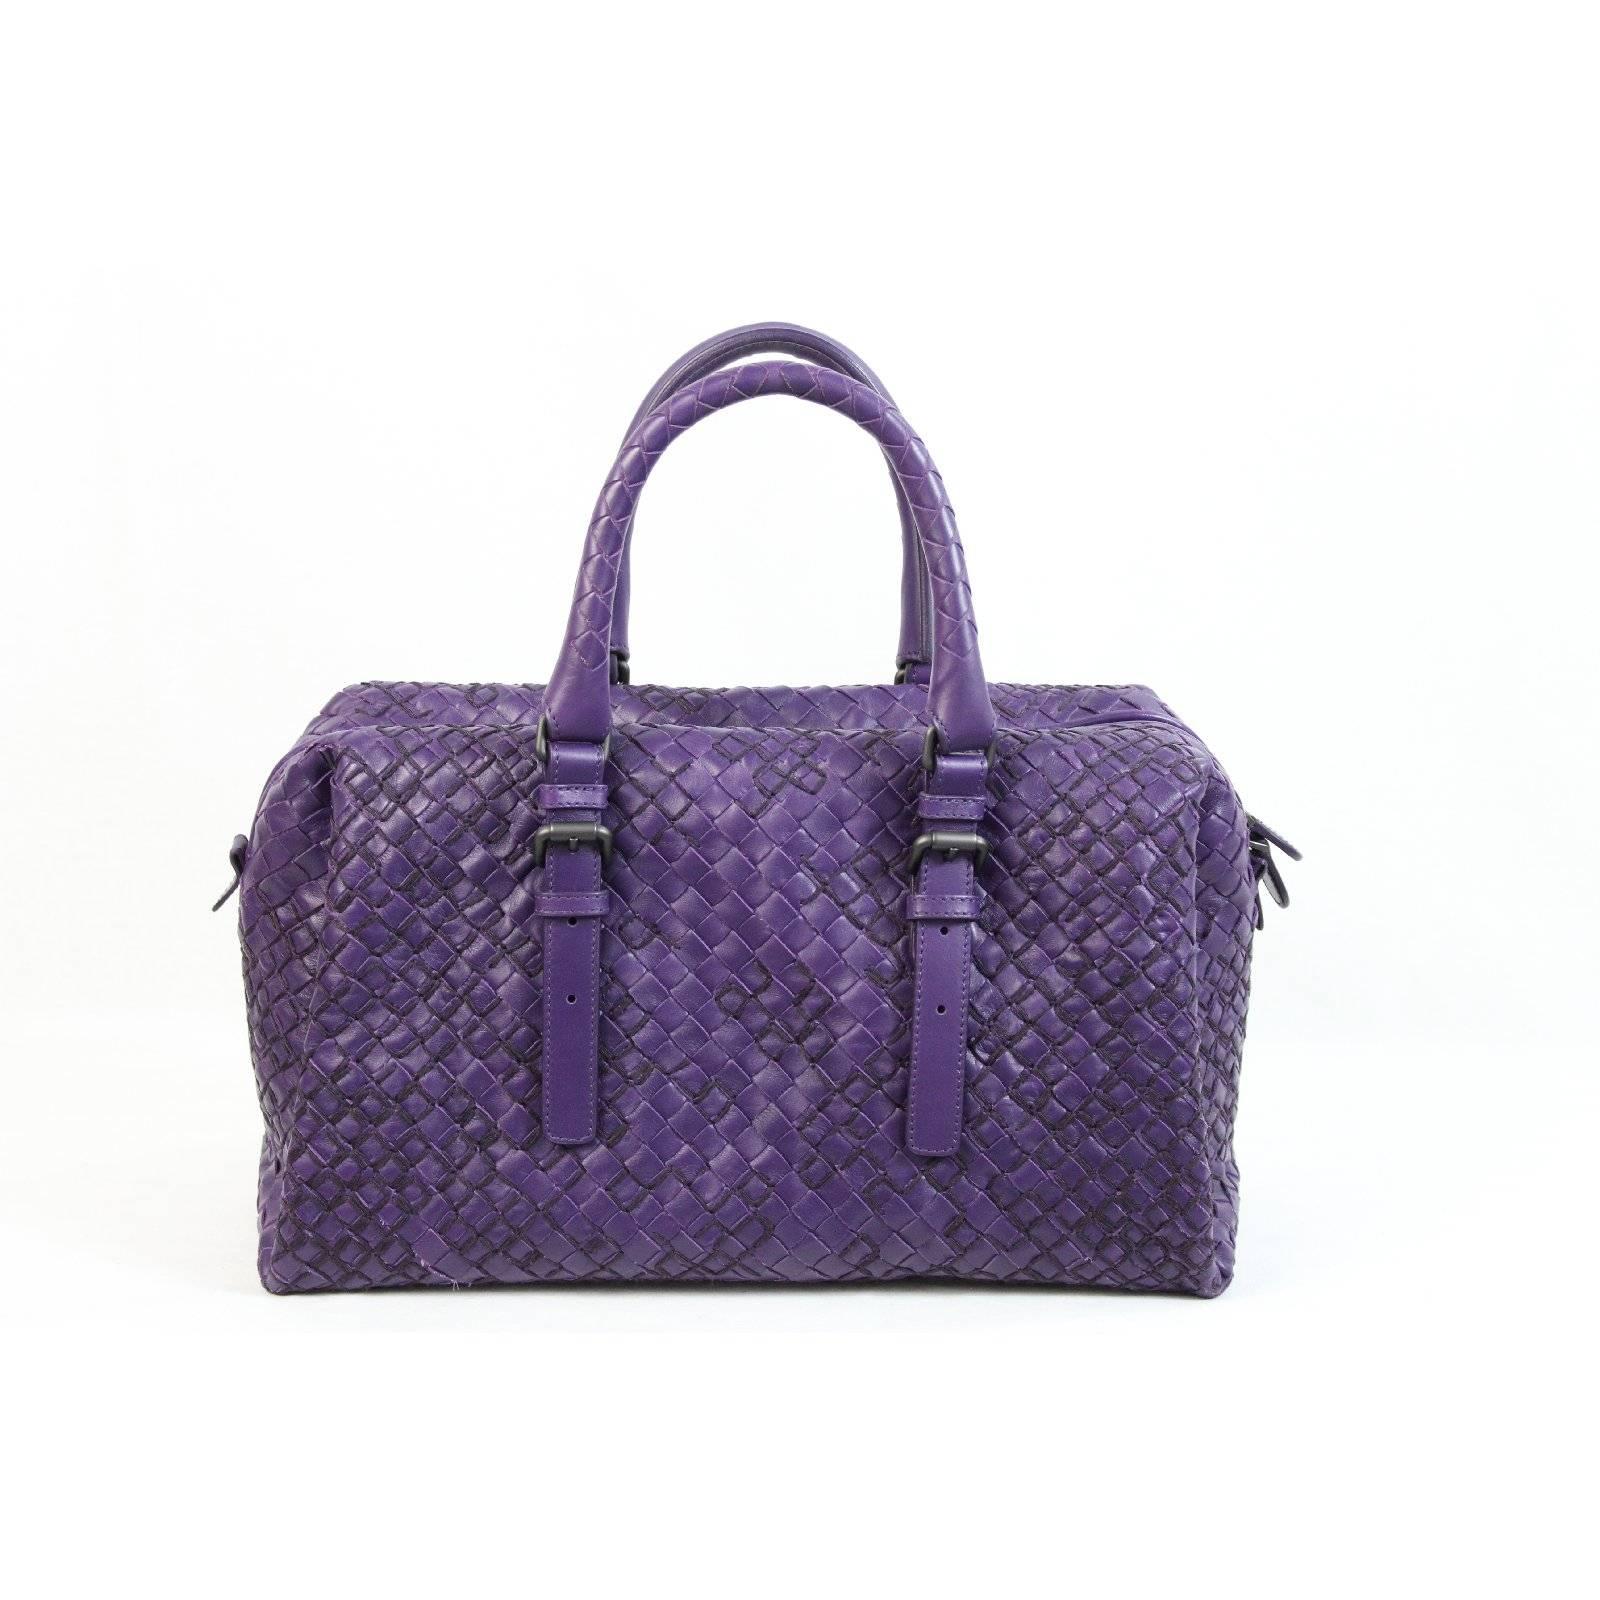 Handbag Bottega Veneta purple Boston pattern, as new in braided leather.

Measurements

Height: 21 cm
Width: 35 cm
Depth: 17 cm

Composition: 100% leather
Color: purple
Conditions: like new